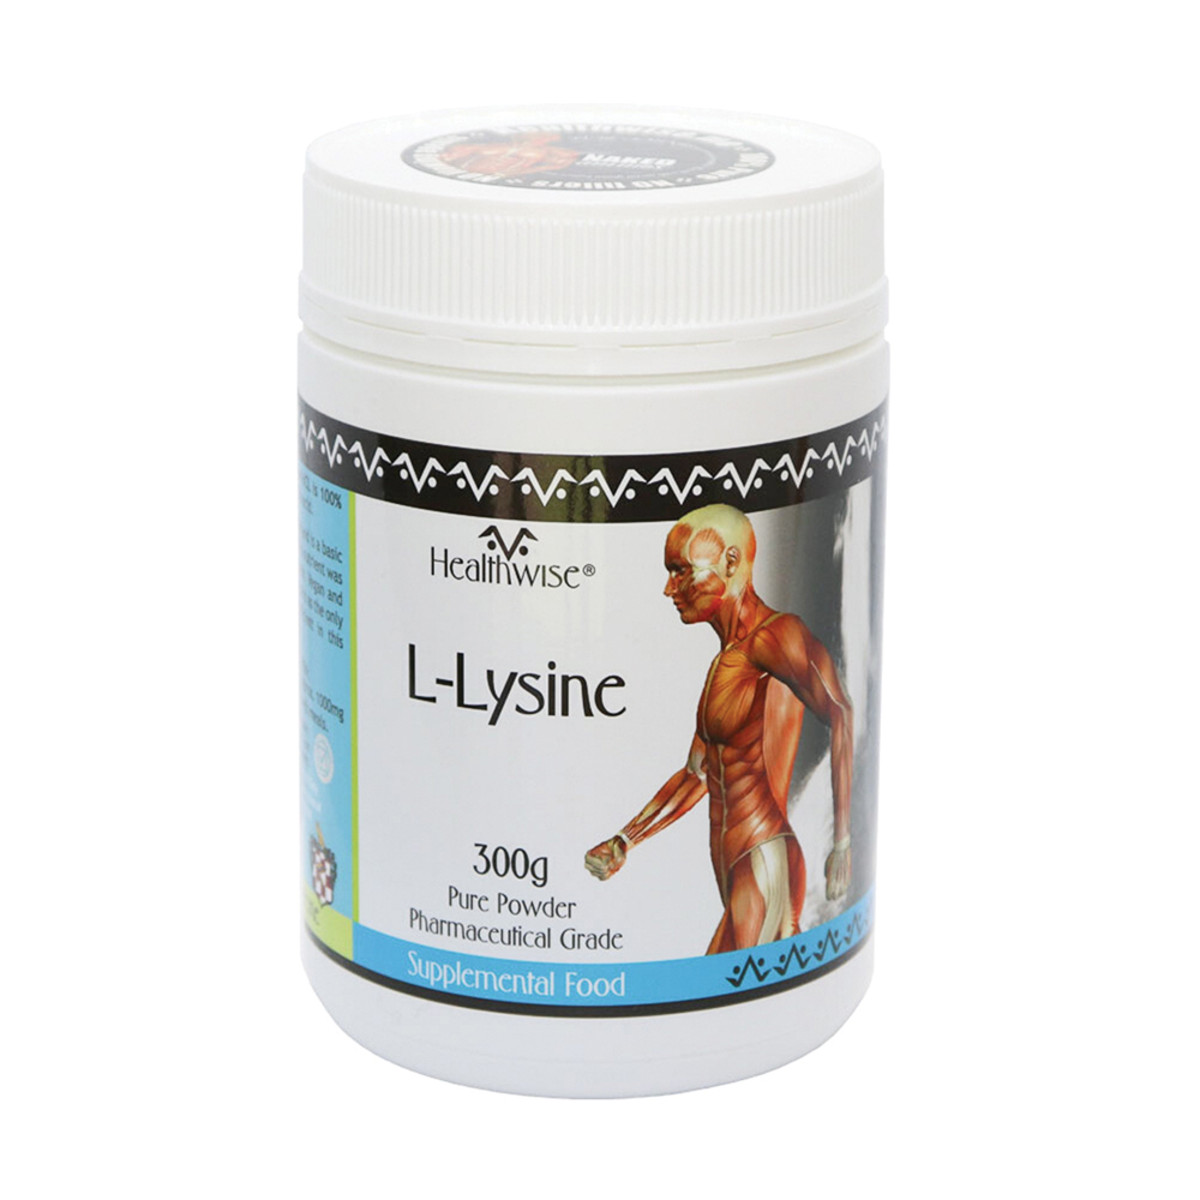 HEALTHWISE - L-Lysine